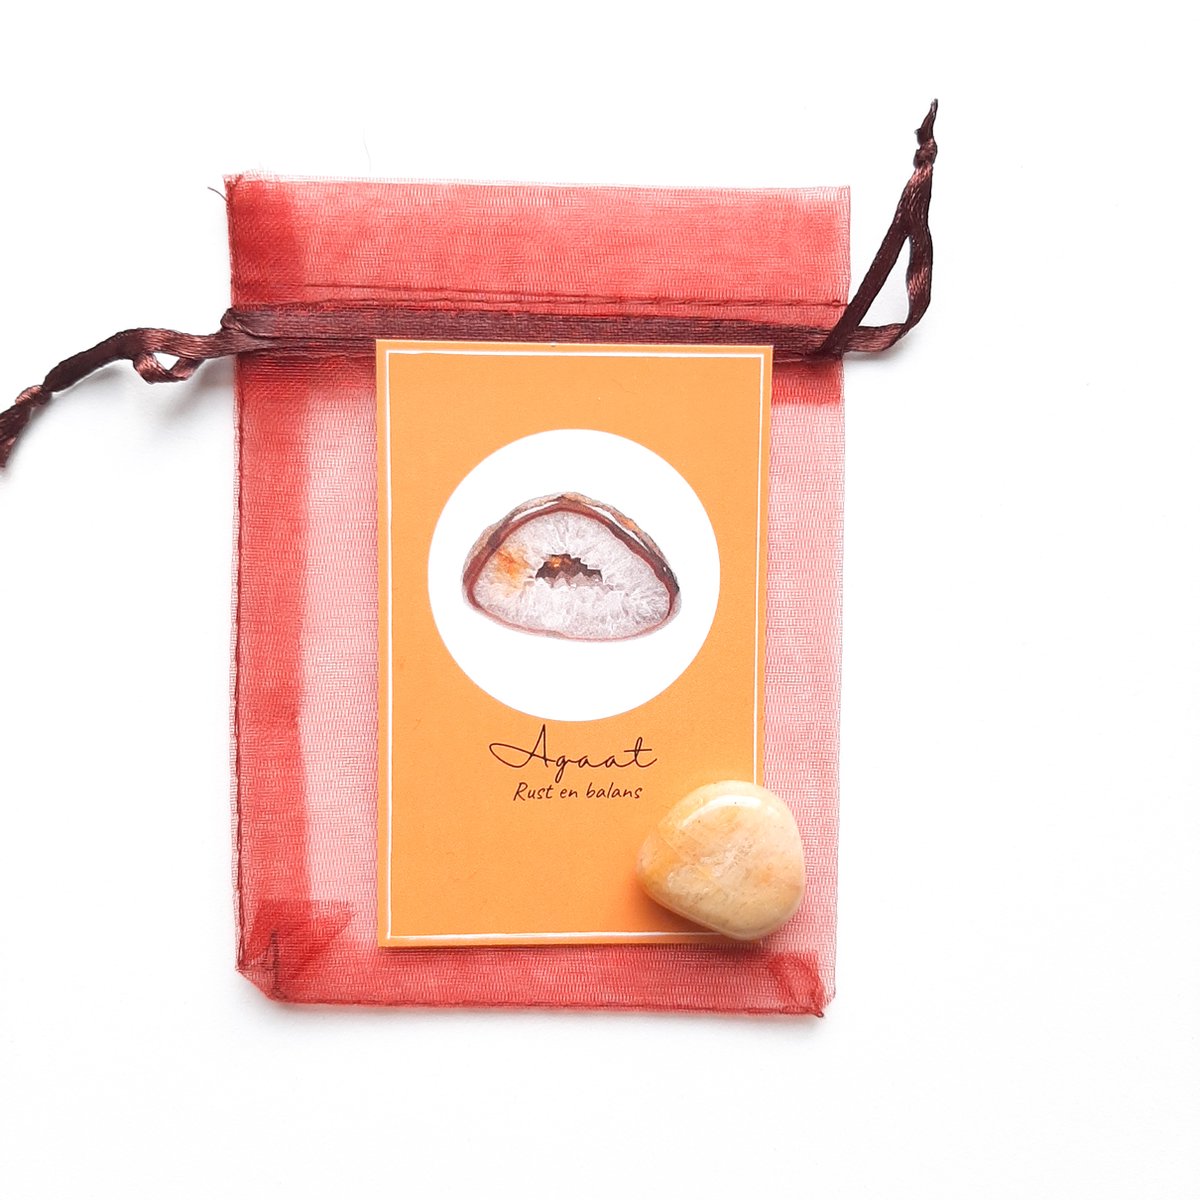 Edelsteen in zakje ''agaat'' trommelsteen, knuffelsteen, natuursteen, giftset, rust en balans